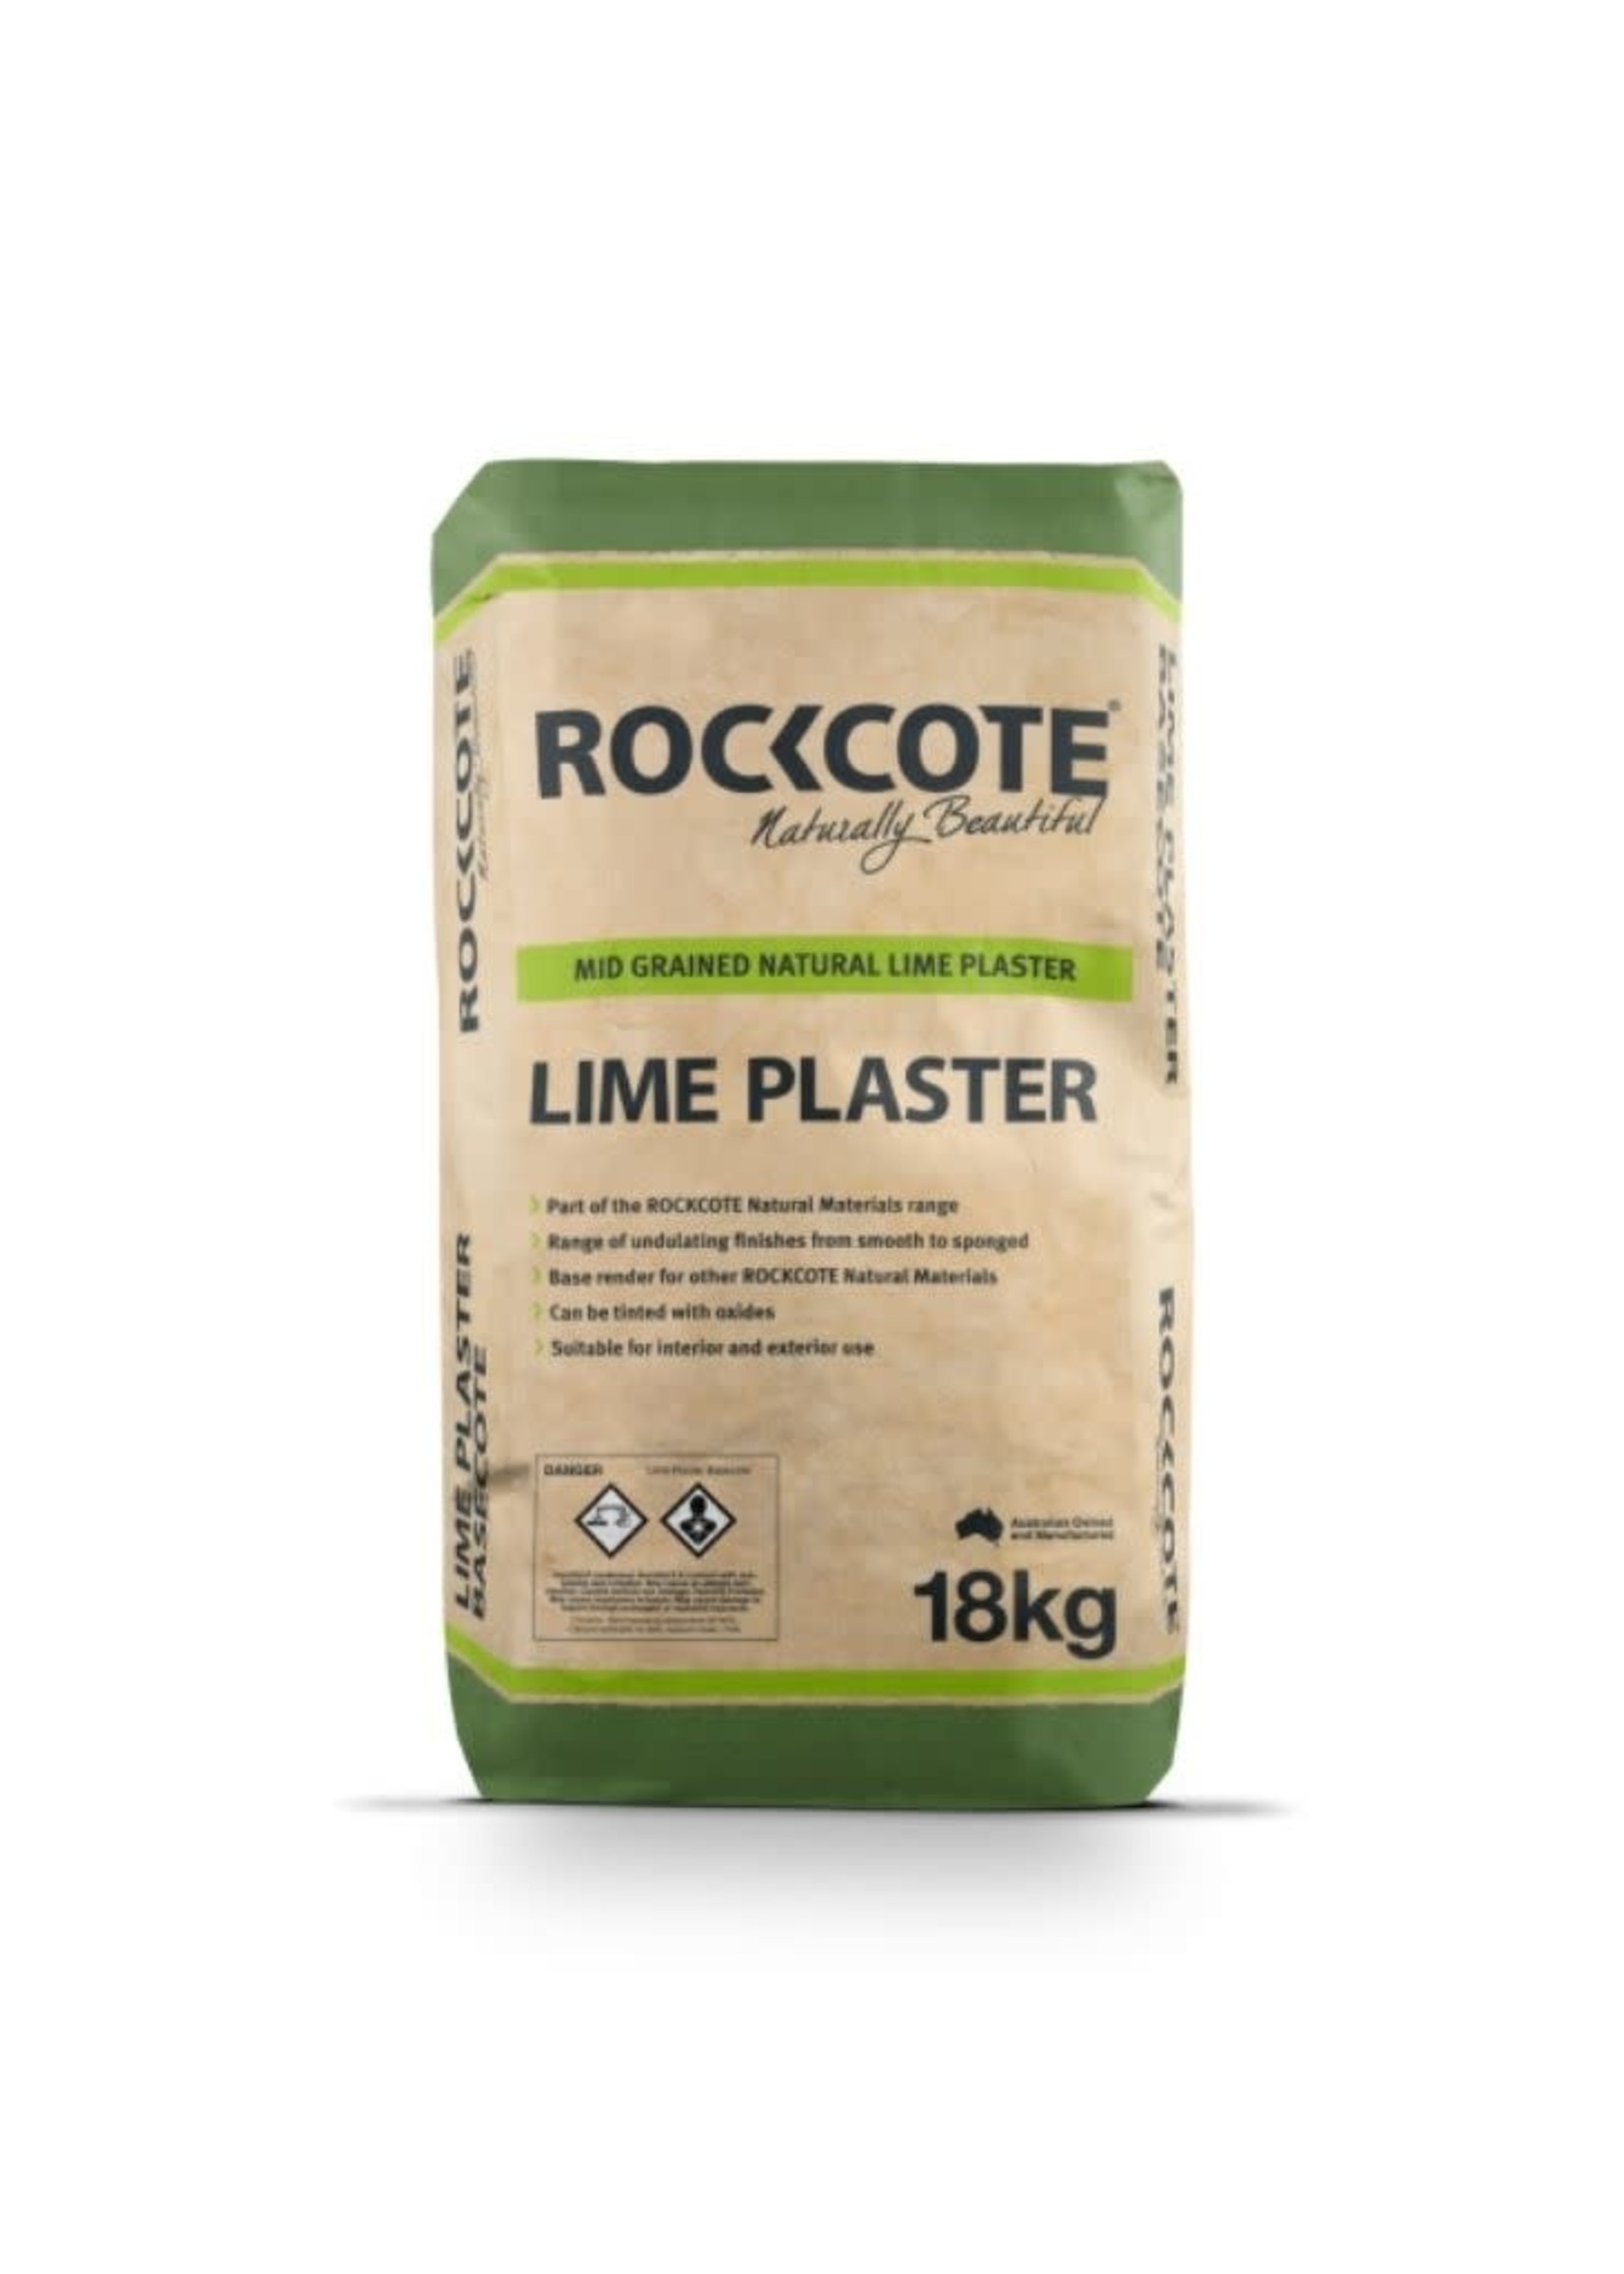 ROCKCOTE Lime Plaster